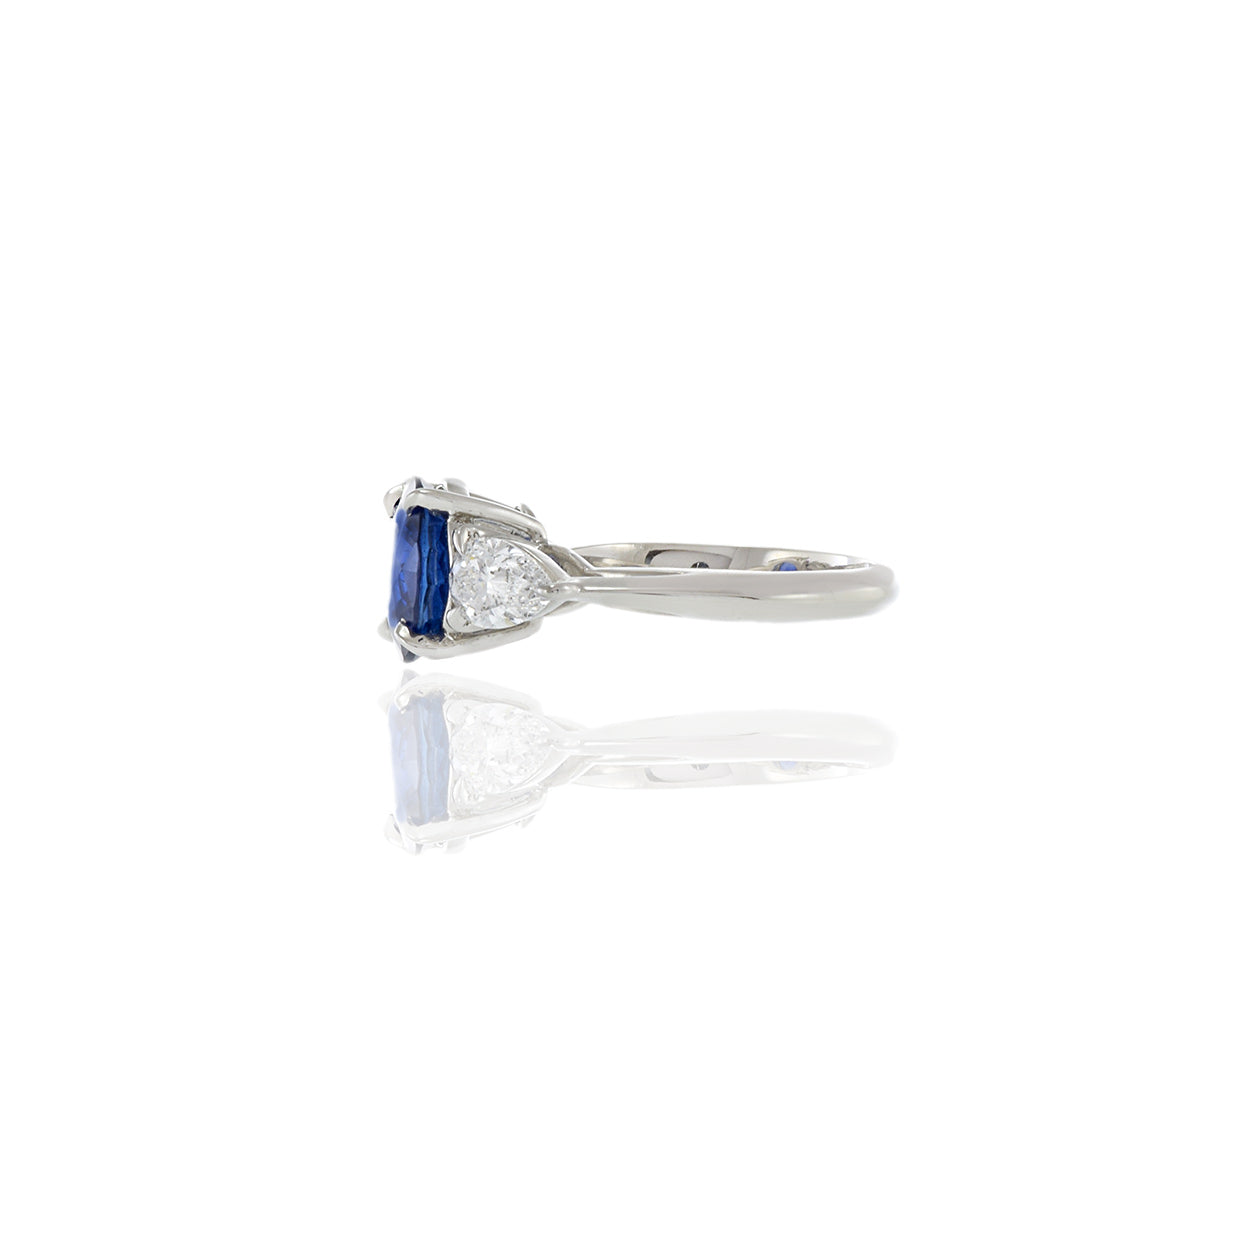 Platinum 3.64CT Ceylon Blue Sapphire and Diamond Ring